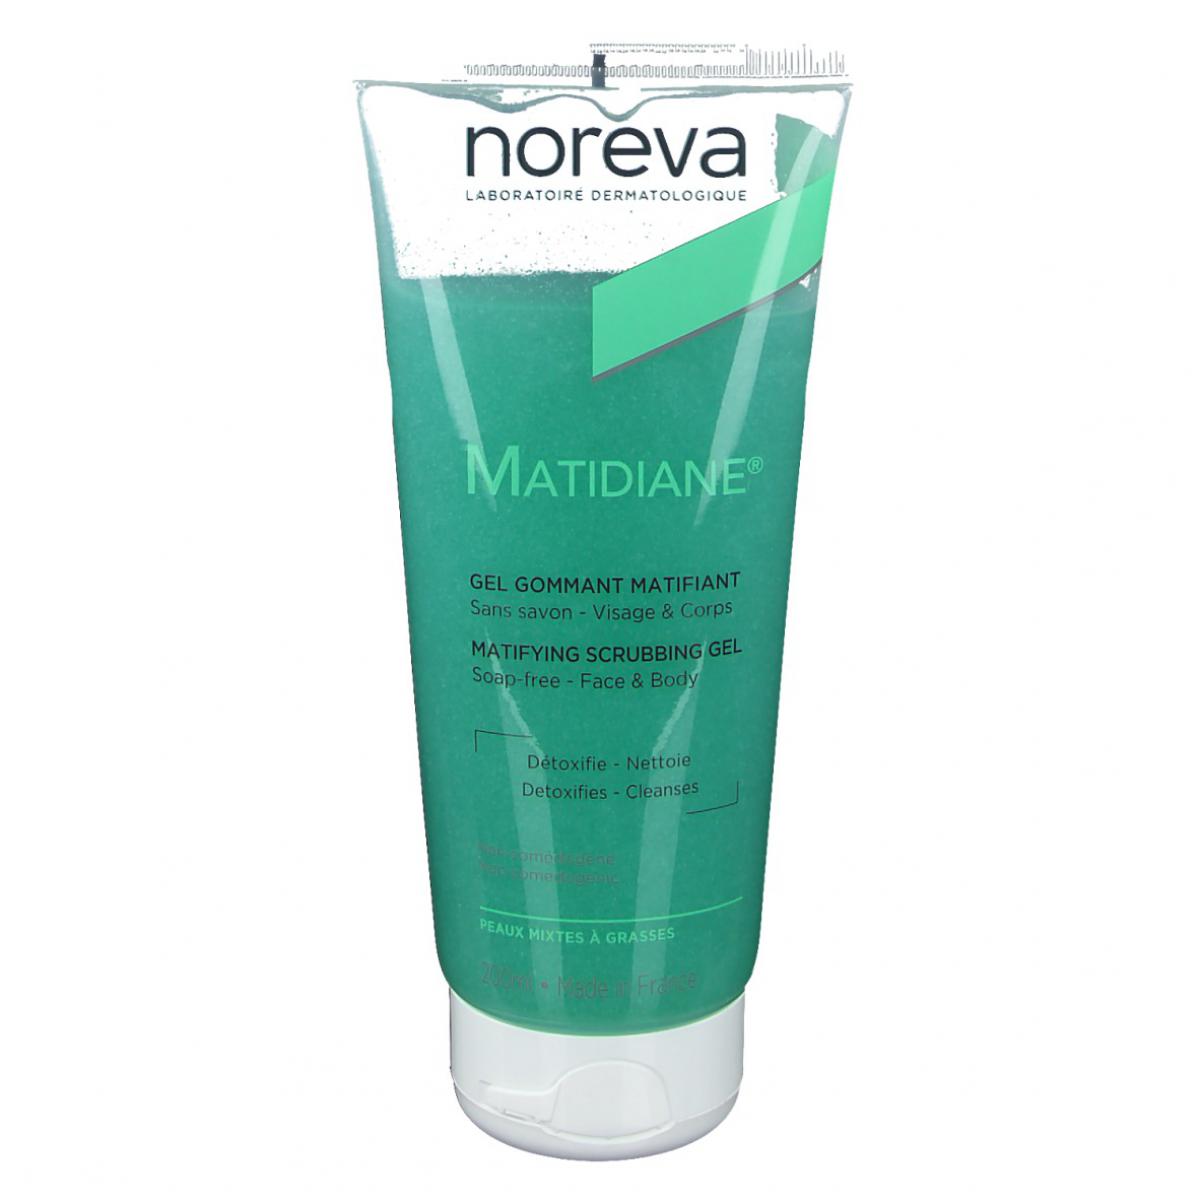 ژل پاک کننده متی دیان - Matidiane Cleansing exfoliating gel NOREVA